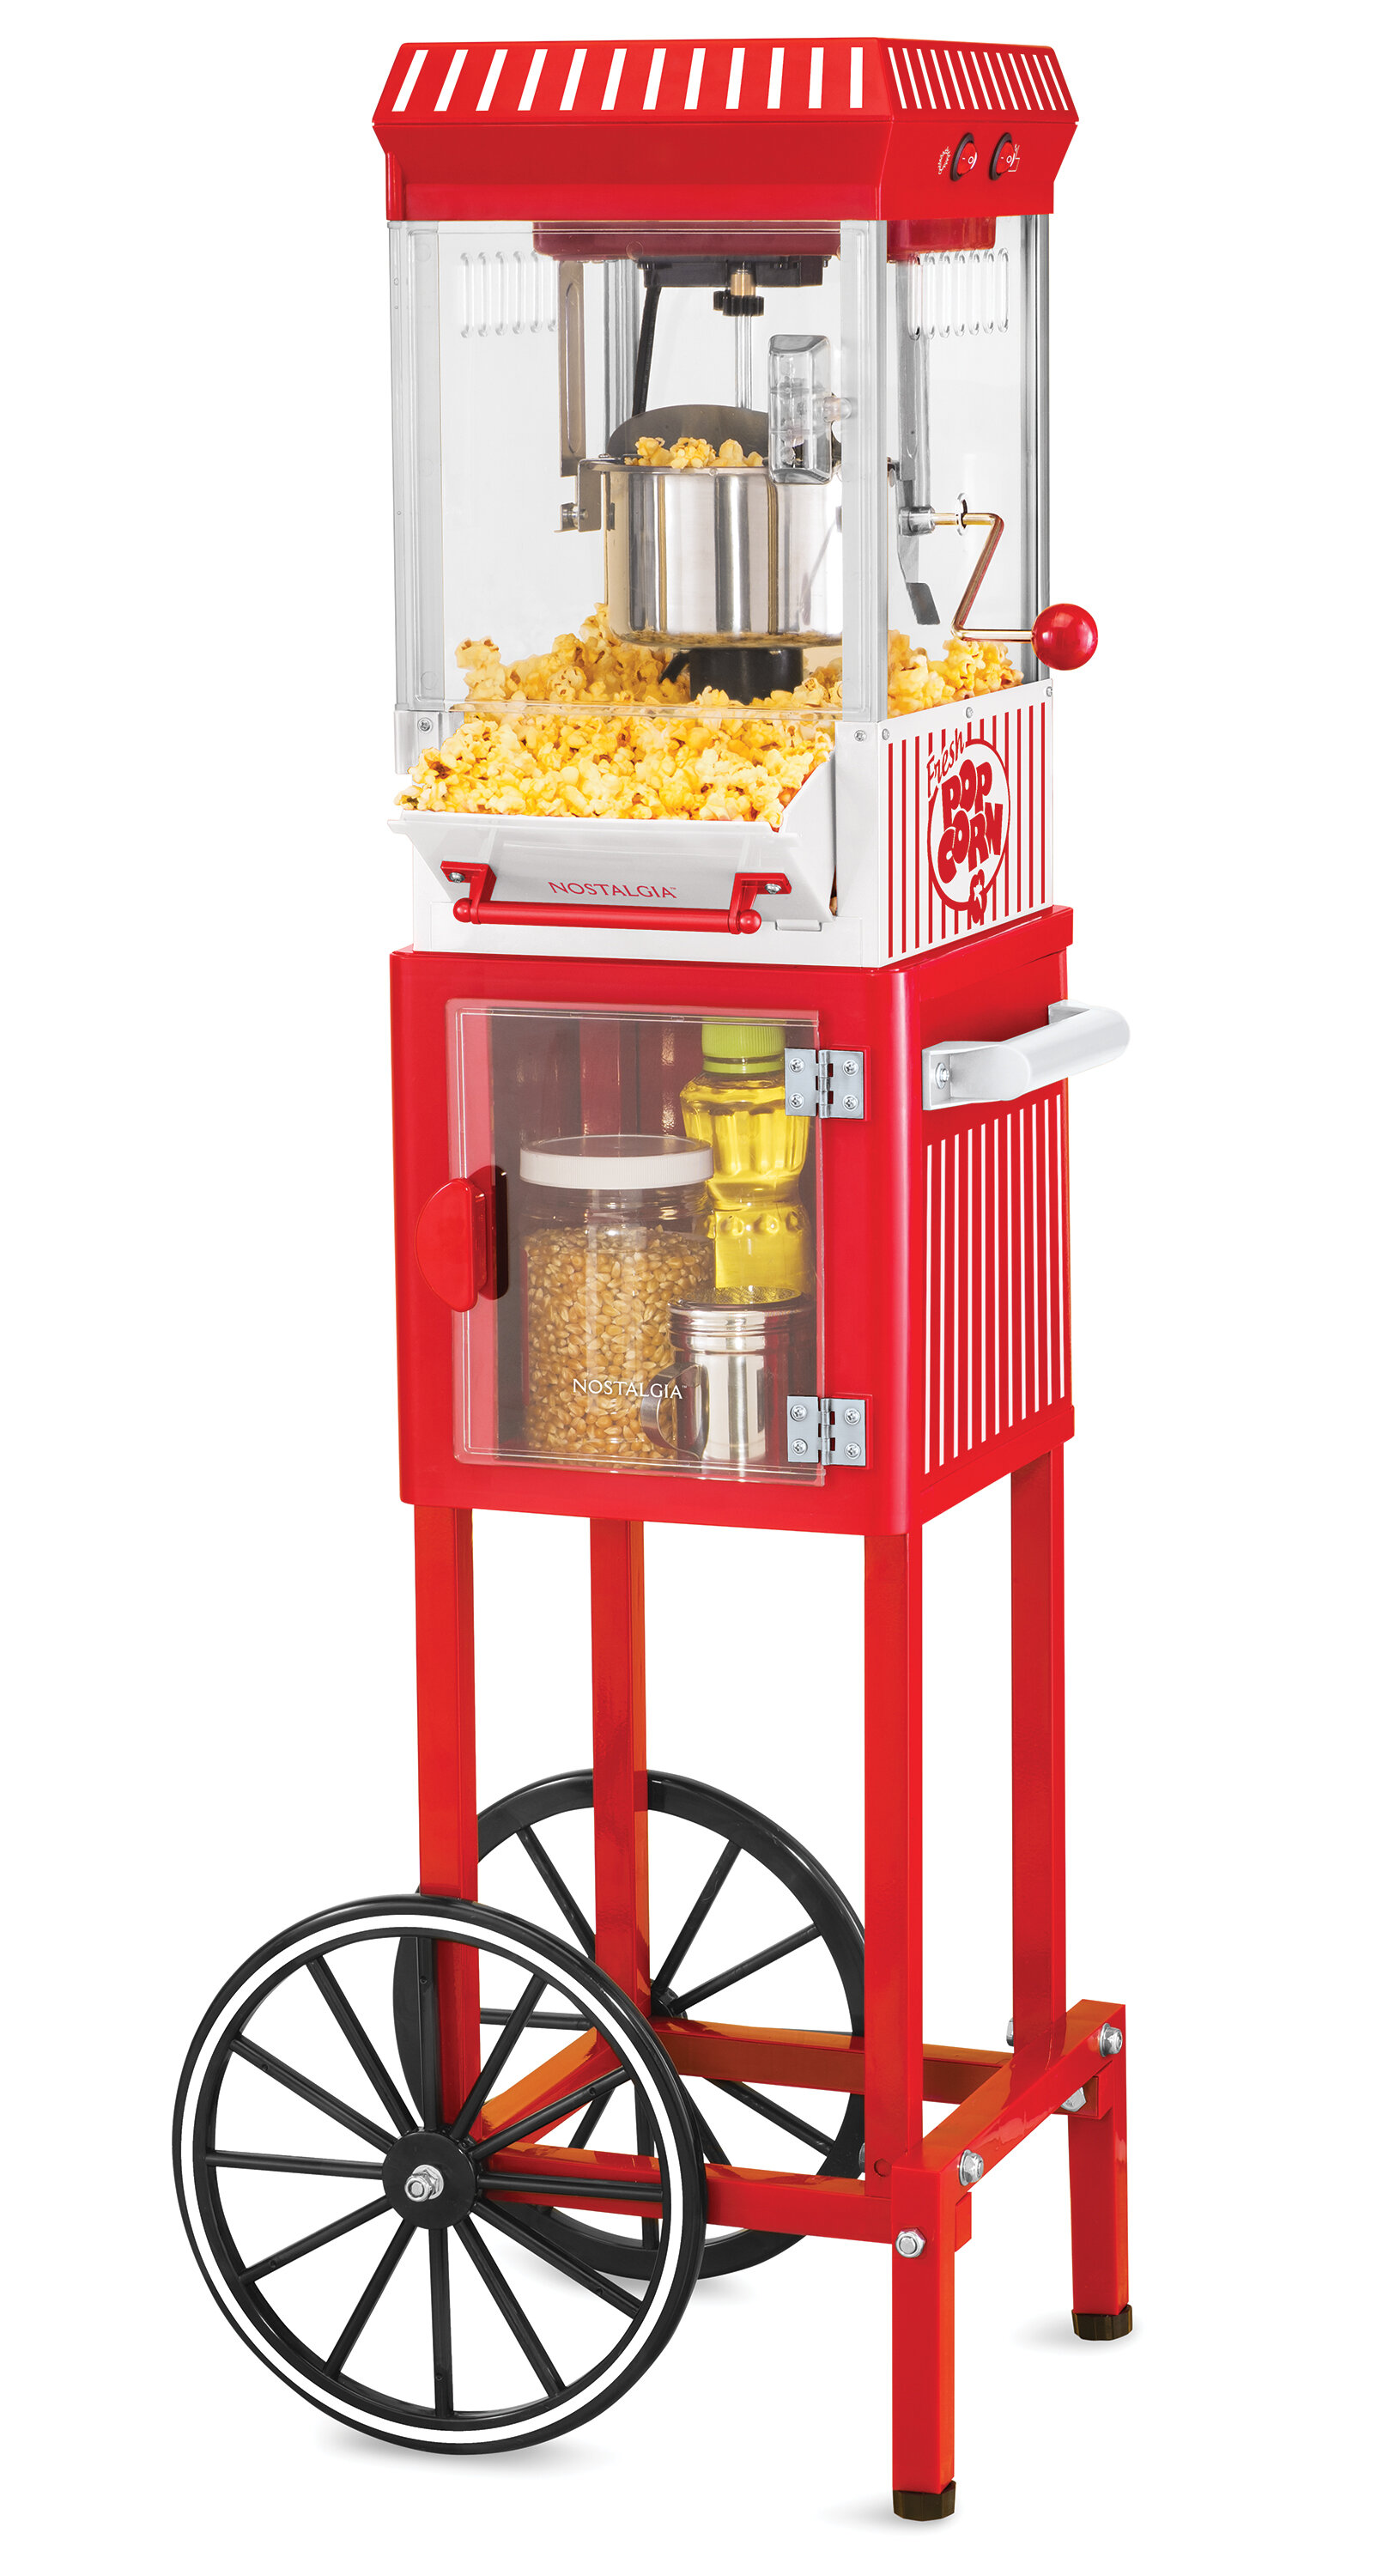 Nostalgia Coca-Cola Table-Top Popcorn Maker, 10 Cups, Hot Air Popcorn  Machine with Measuring Cap, Oil Free, Coke Red